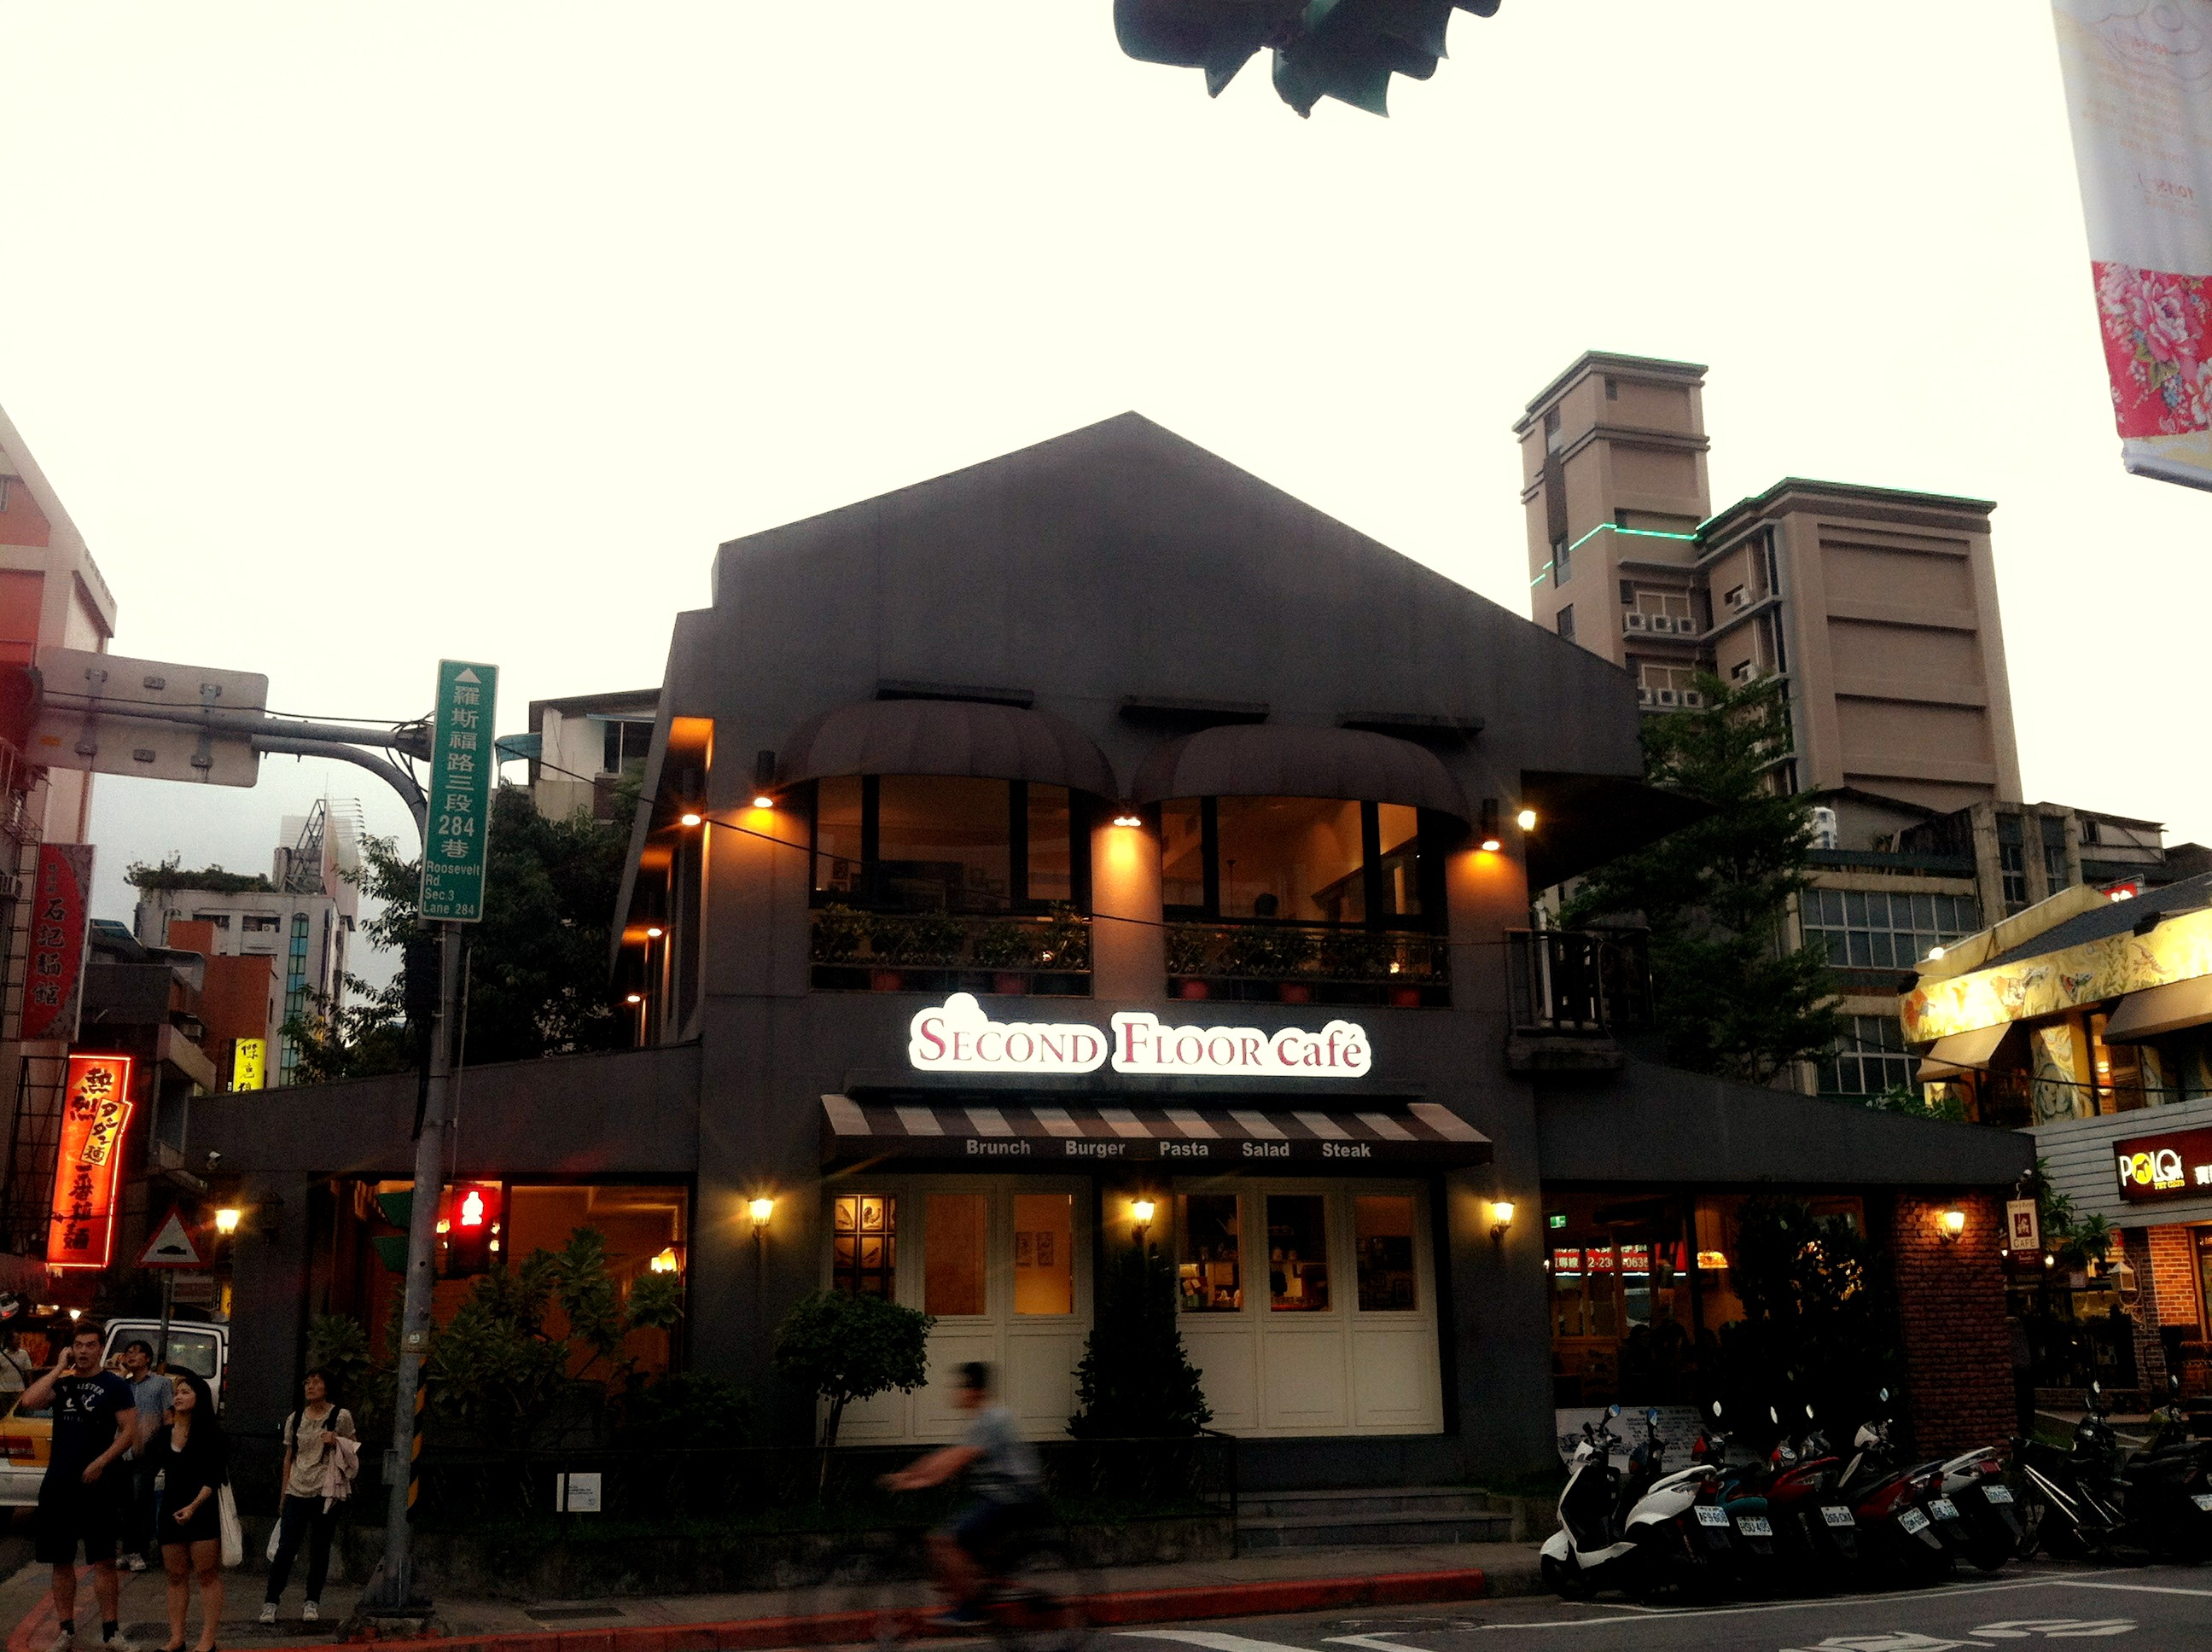 Second Floor Cafe Taipeiwo